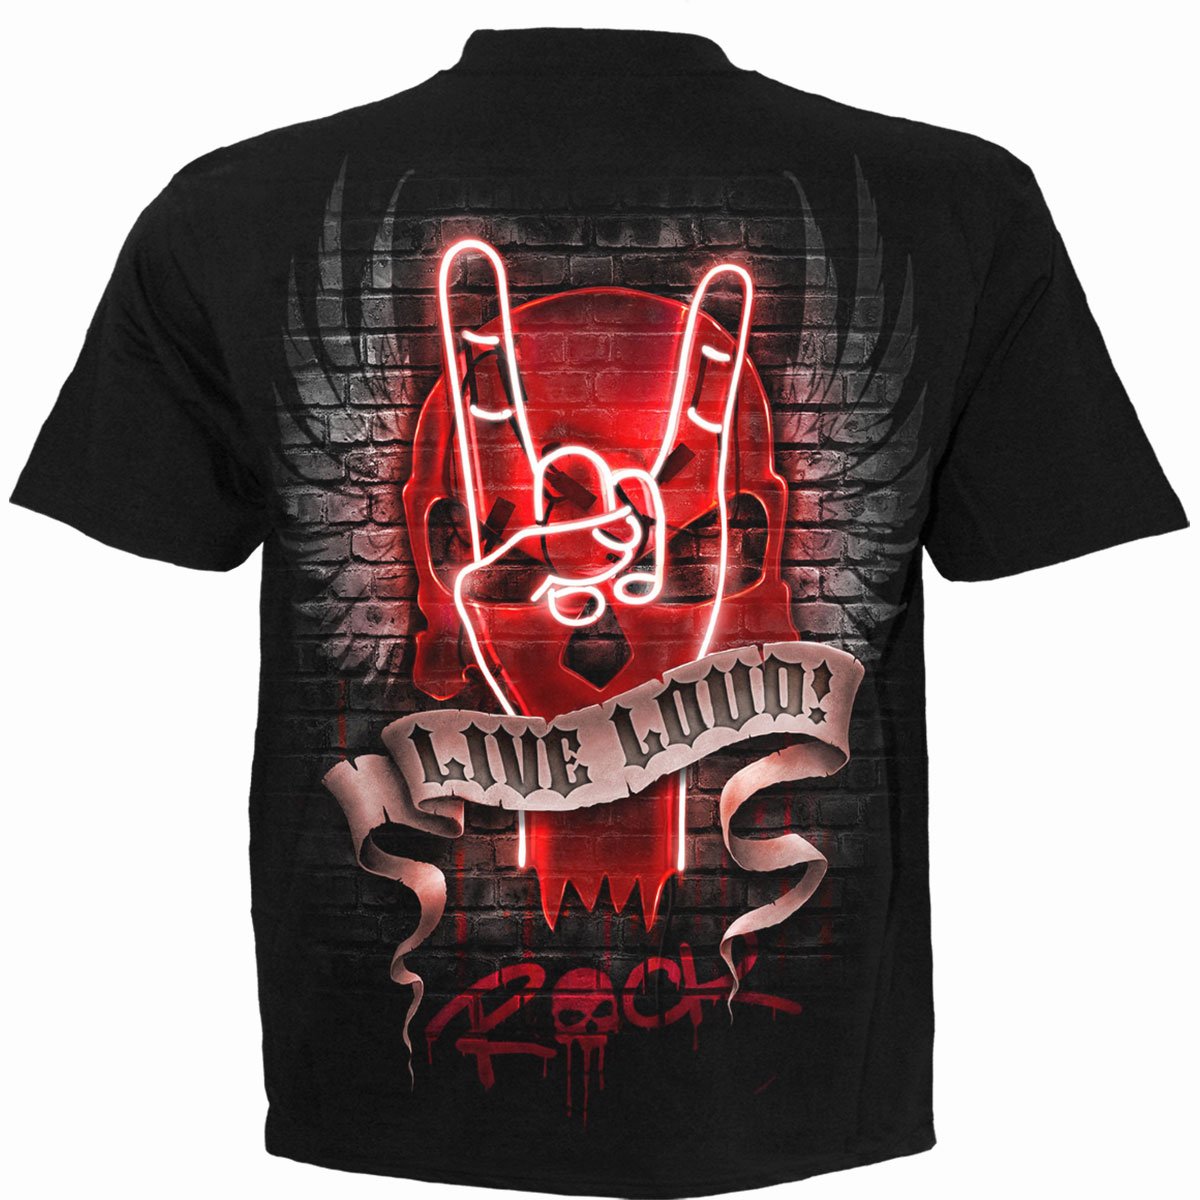 LIVE LOUD - T-Shirt Black - Spiral USA